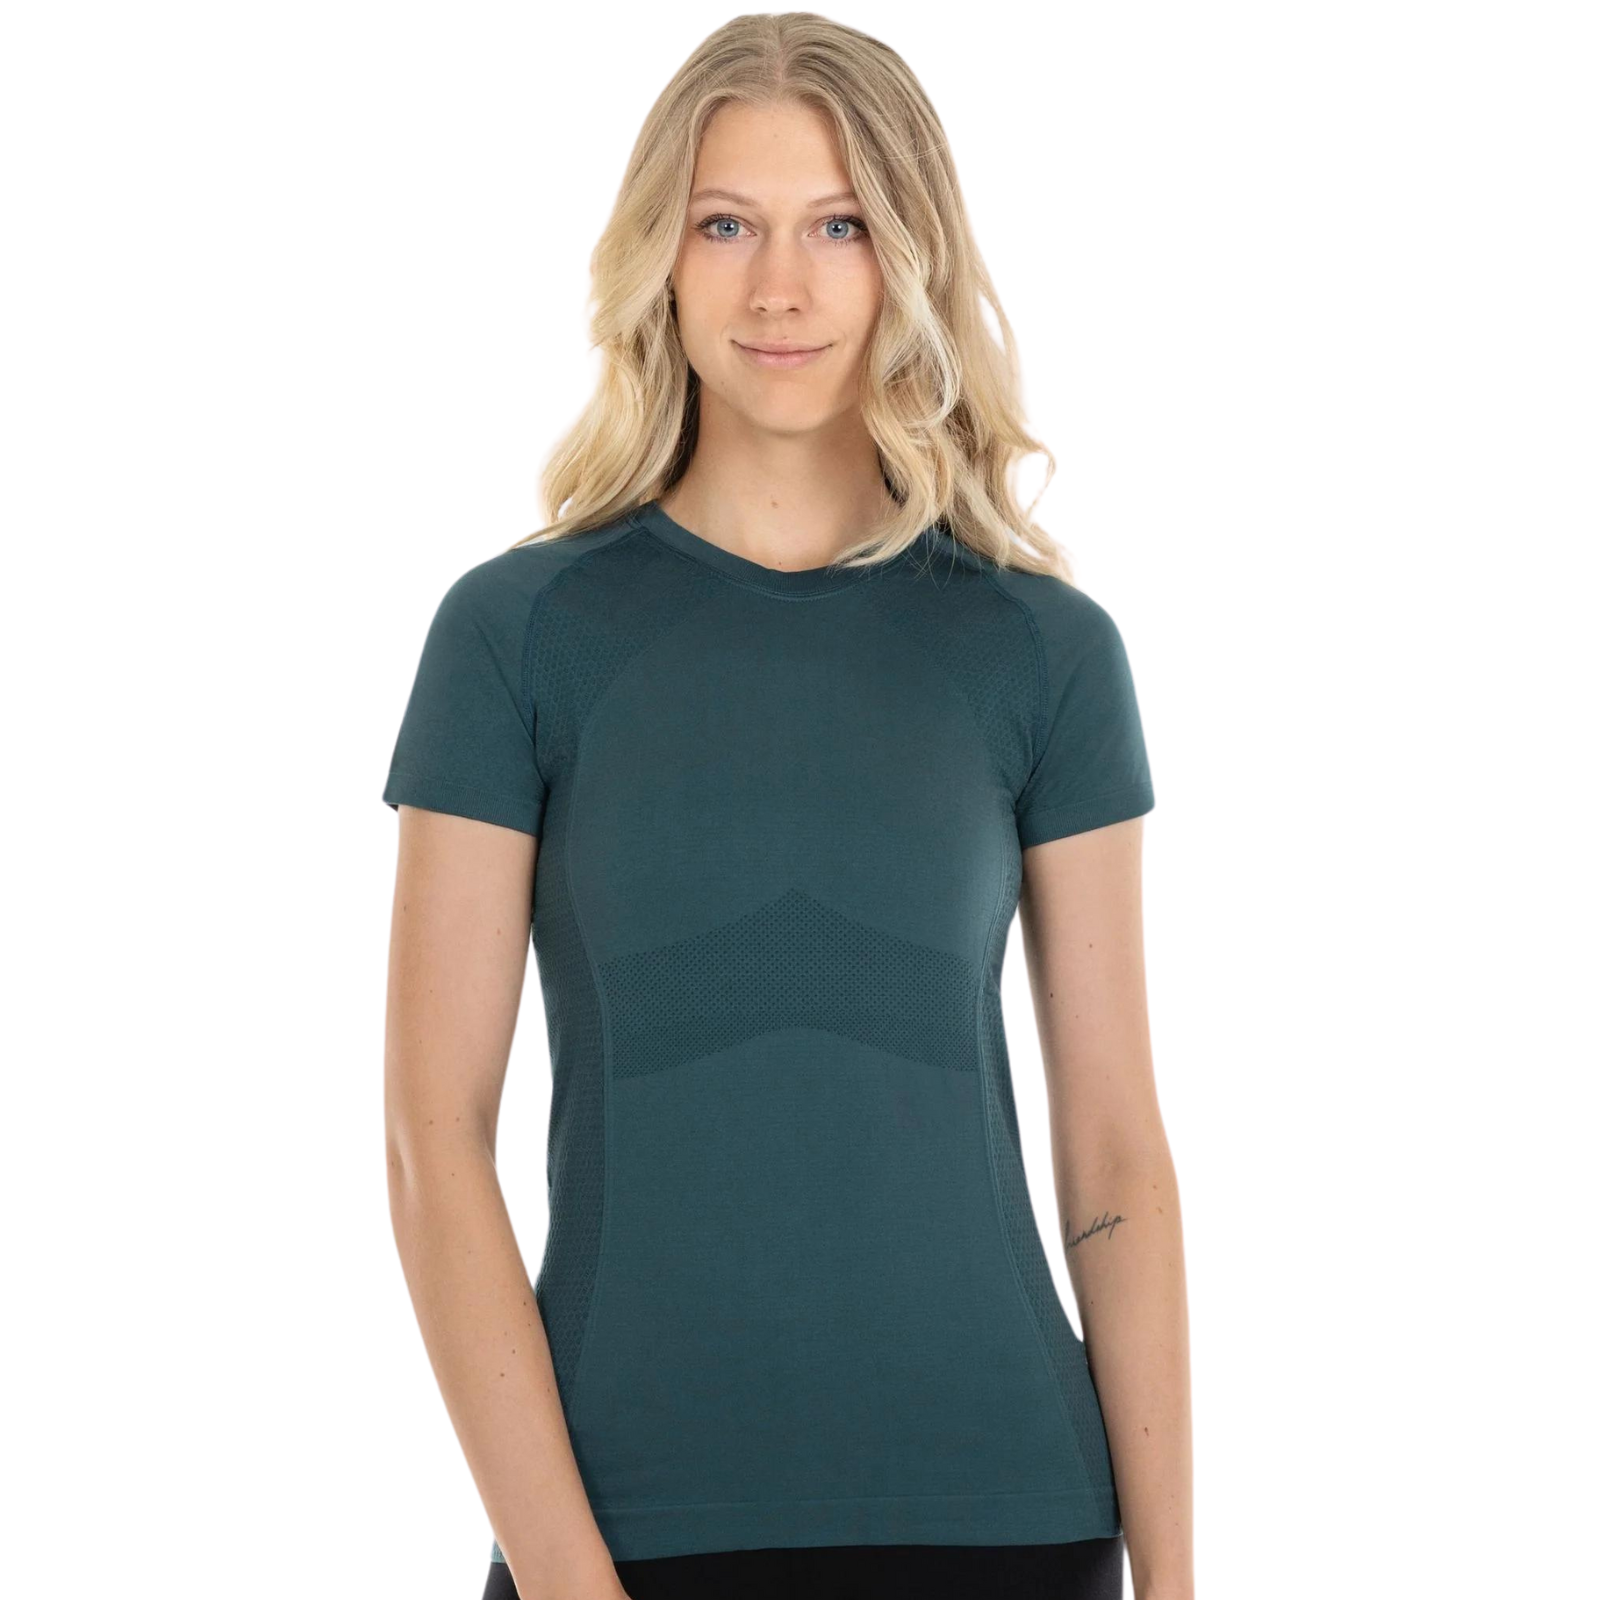 Anique Short Sleeve Crew Shirt in Peppermint - Women's XL (12